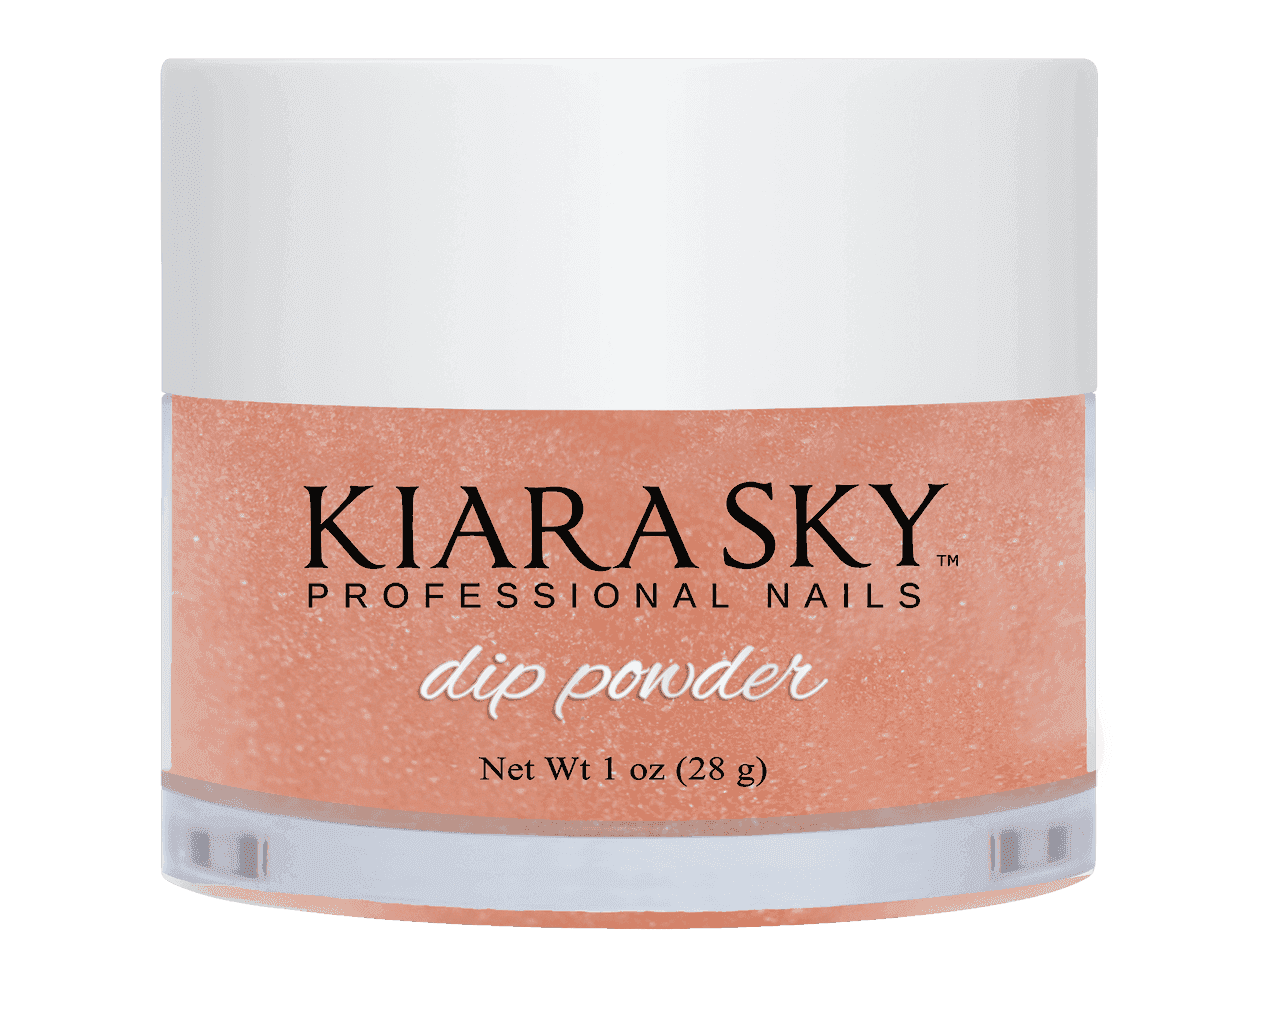 Kiara Sky Dip Powder - D470 COPPER OUT